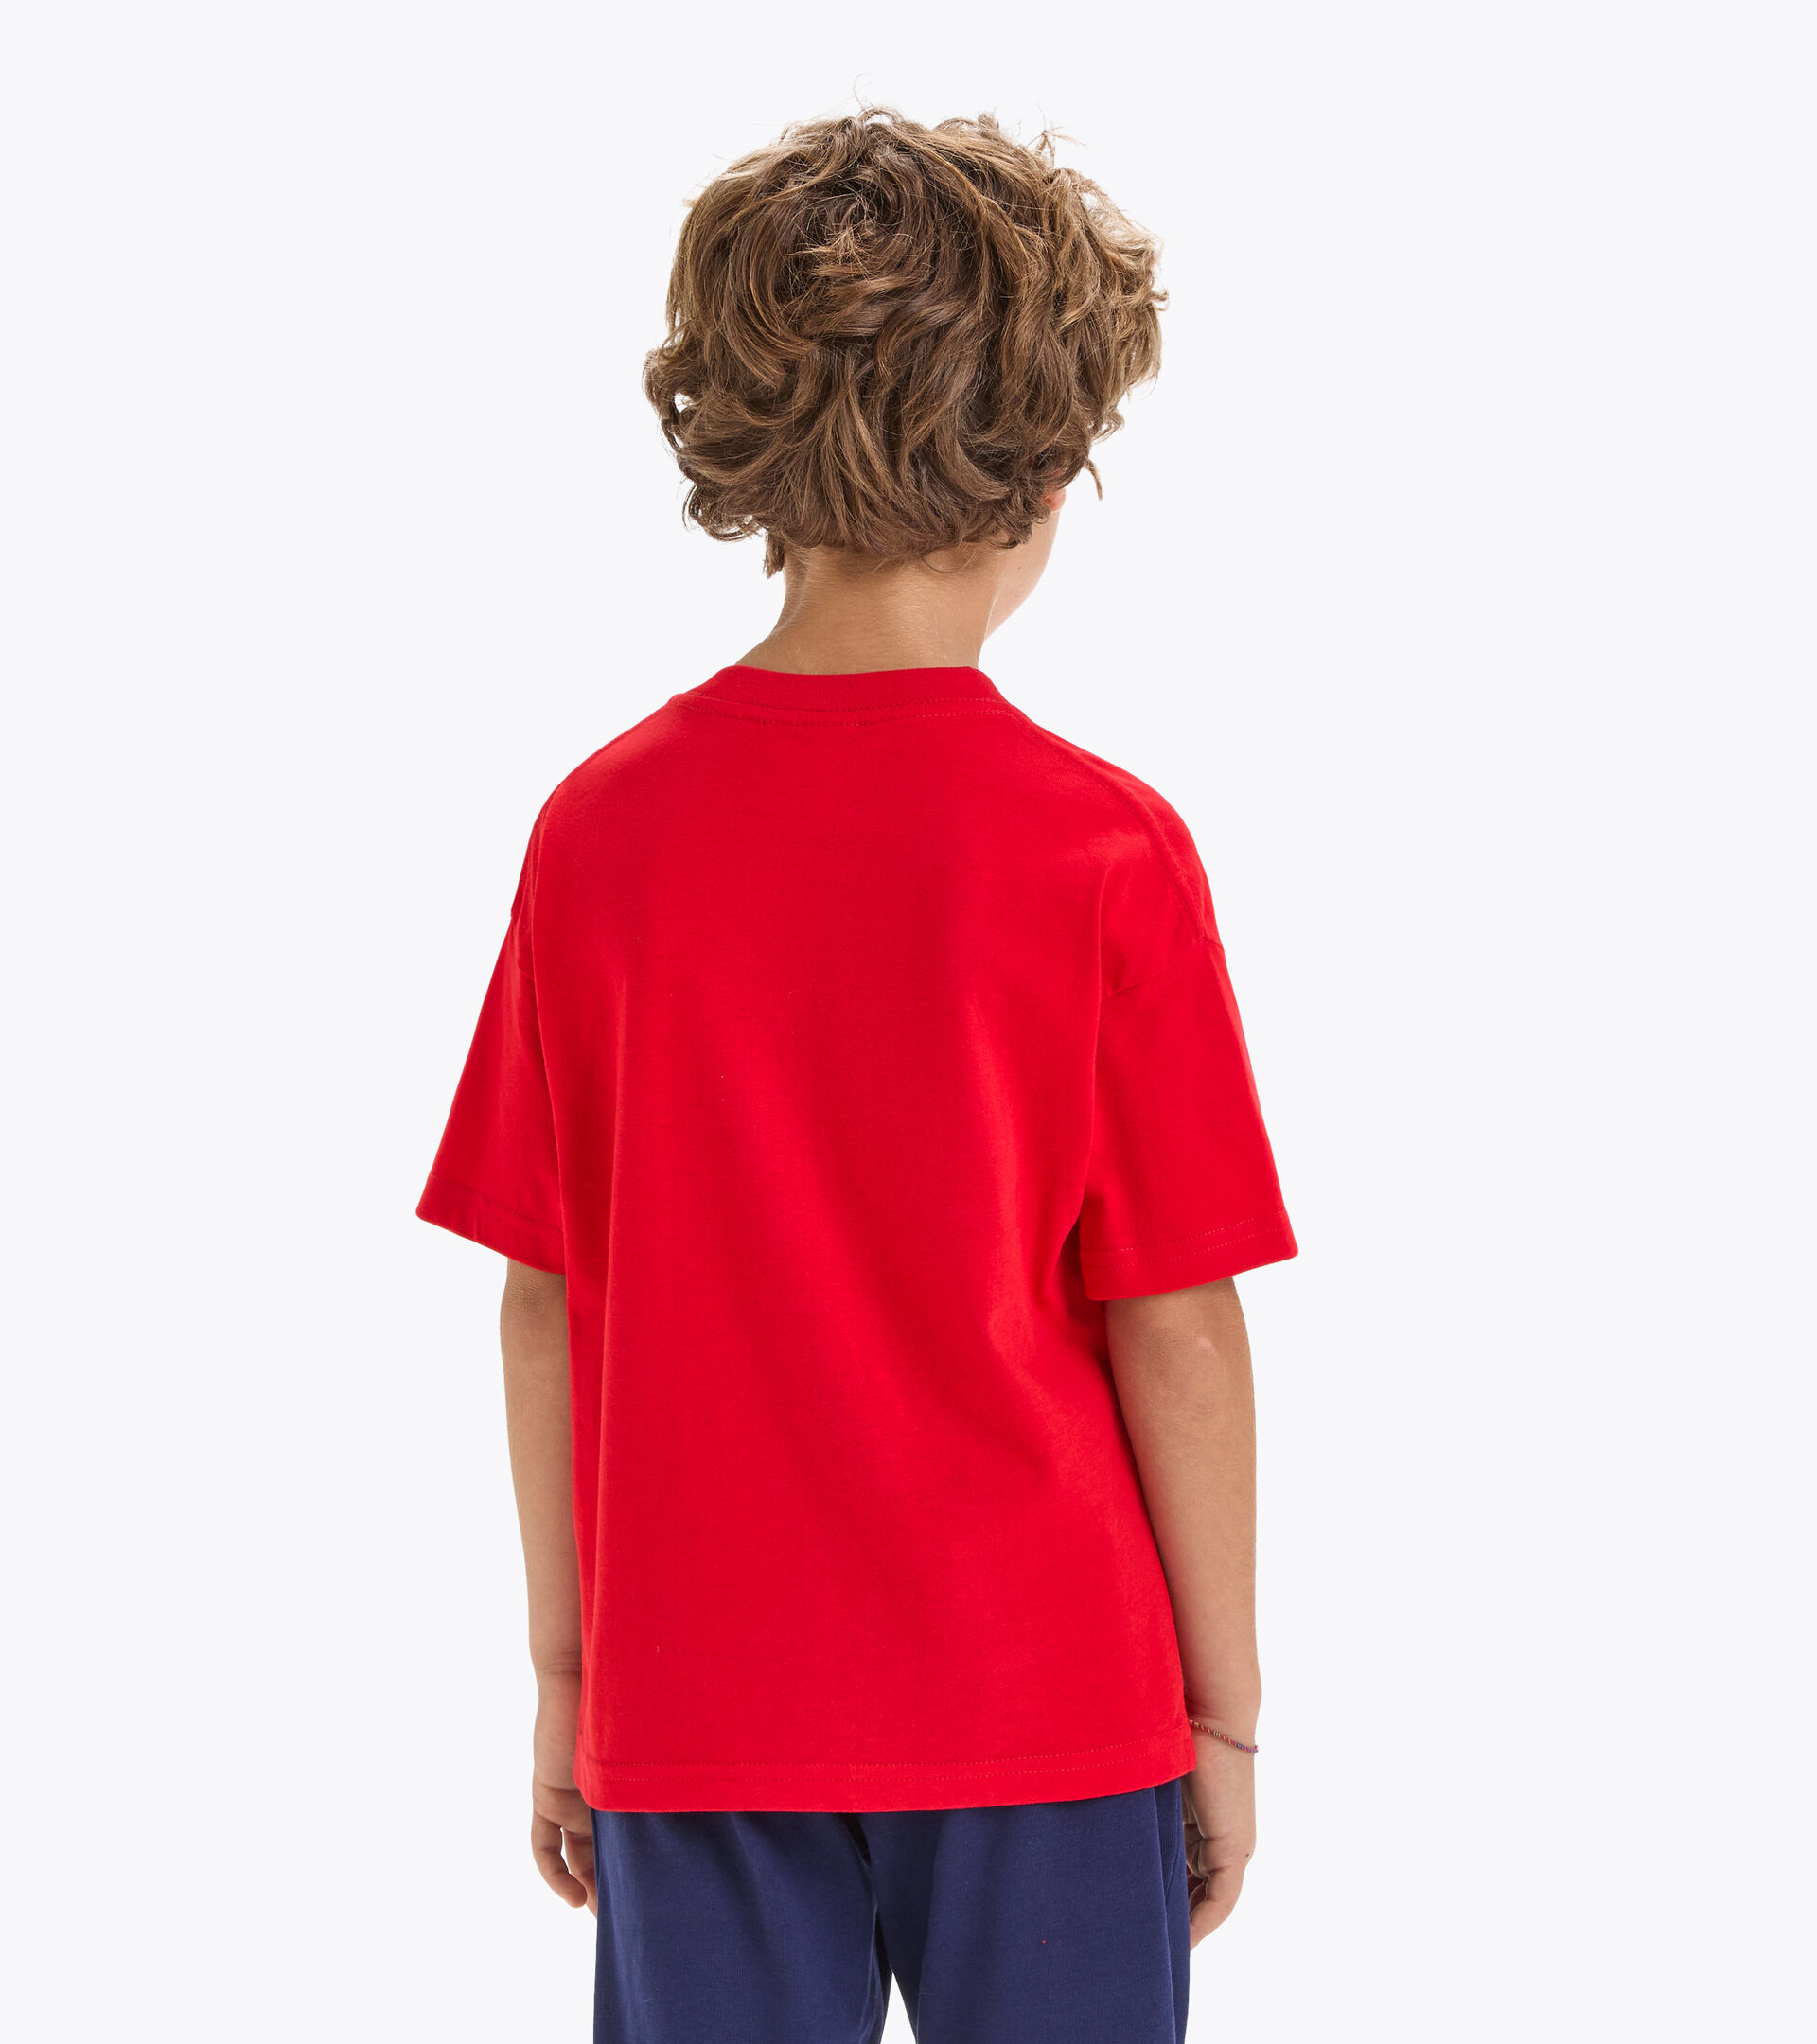 Camiseta deportiva - Niños y Niñas
 JU.T-SHIRT SS BL ROJO ALTO RIESGO - Diadora